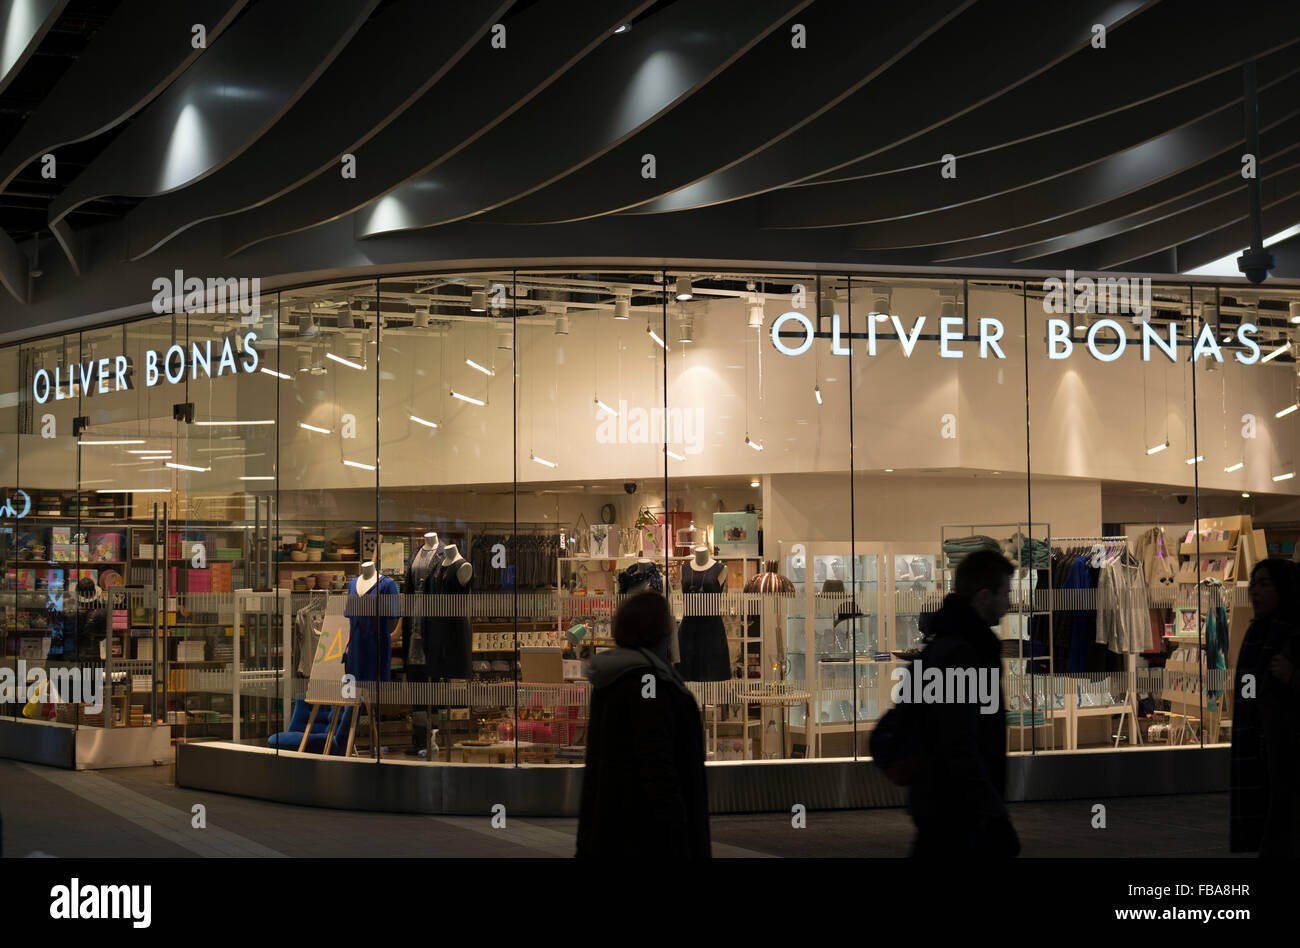 Oliver Bonas store, Grand Central, Birmingham, UK Stock Photo - Alamy